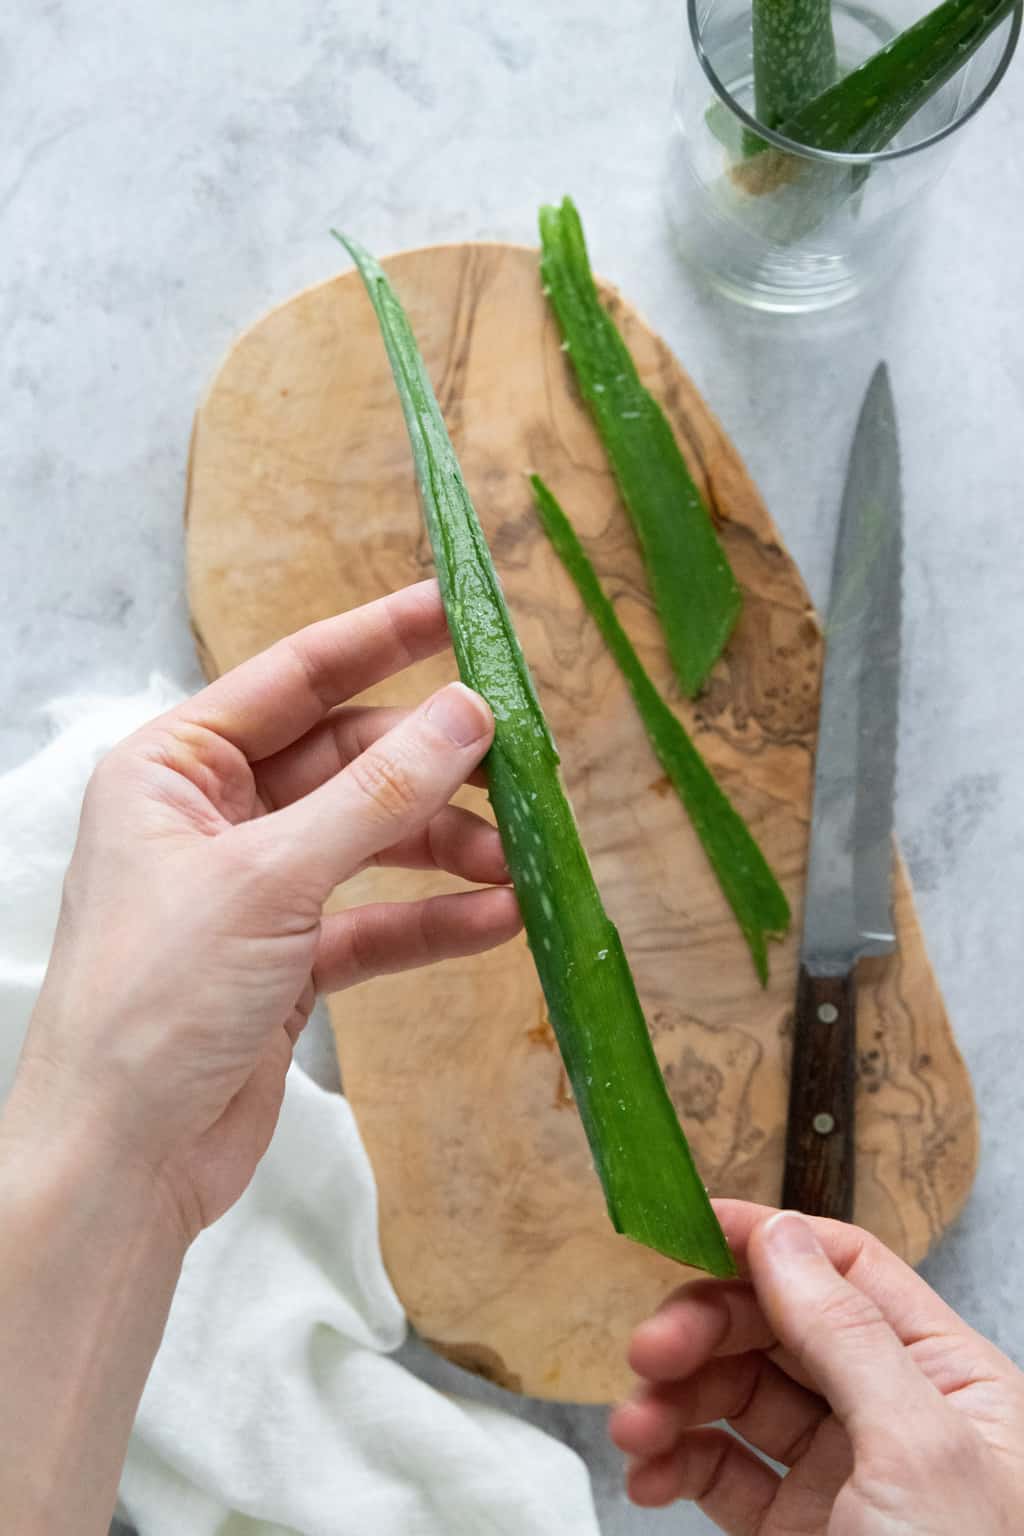 Cut aloe leaf in half to harvest fresh aloe gel